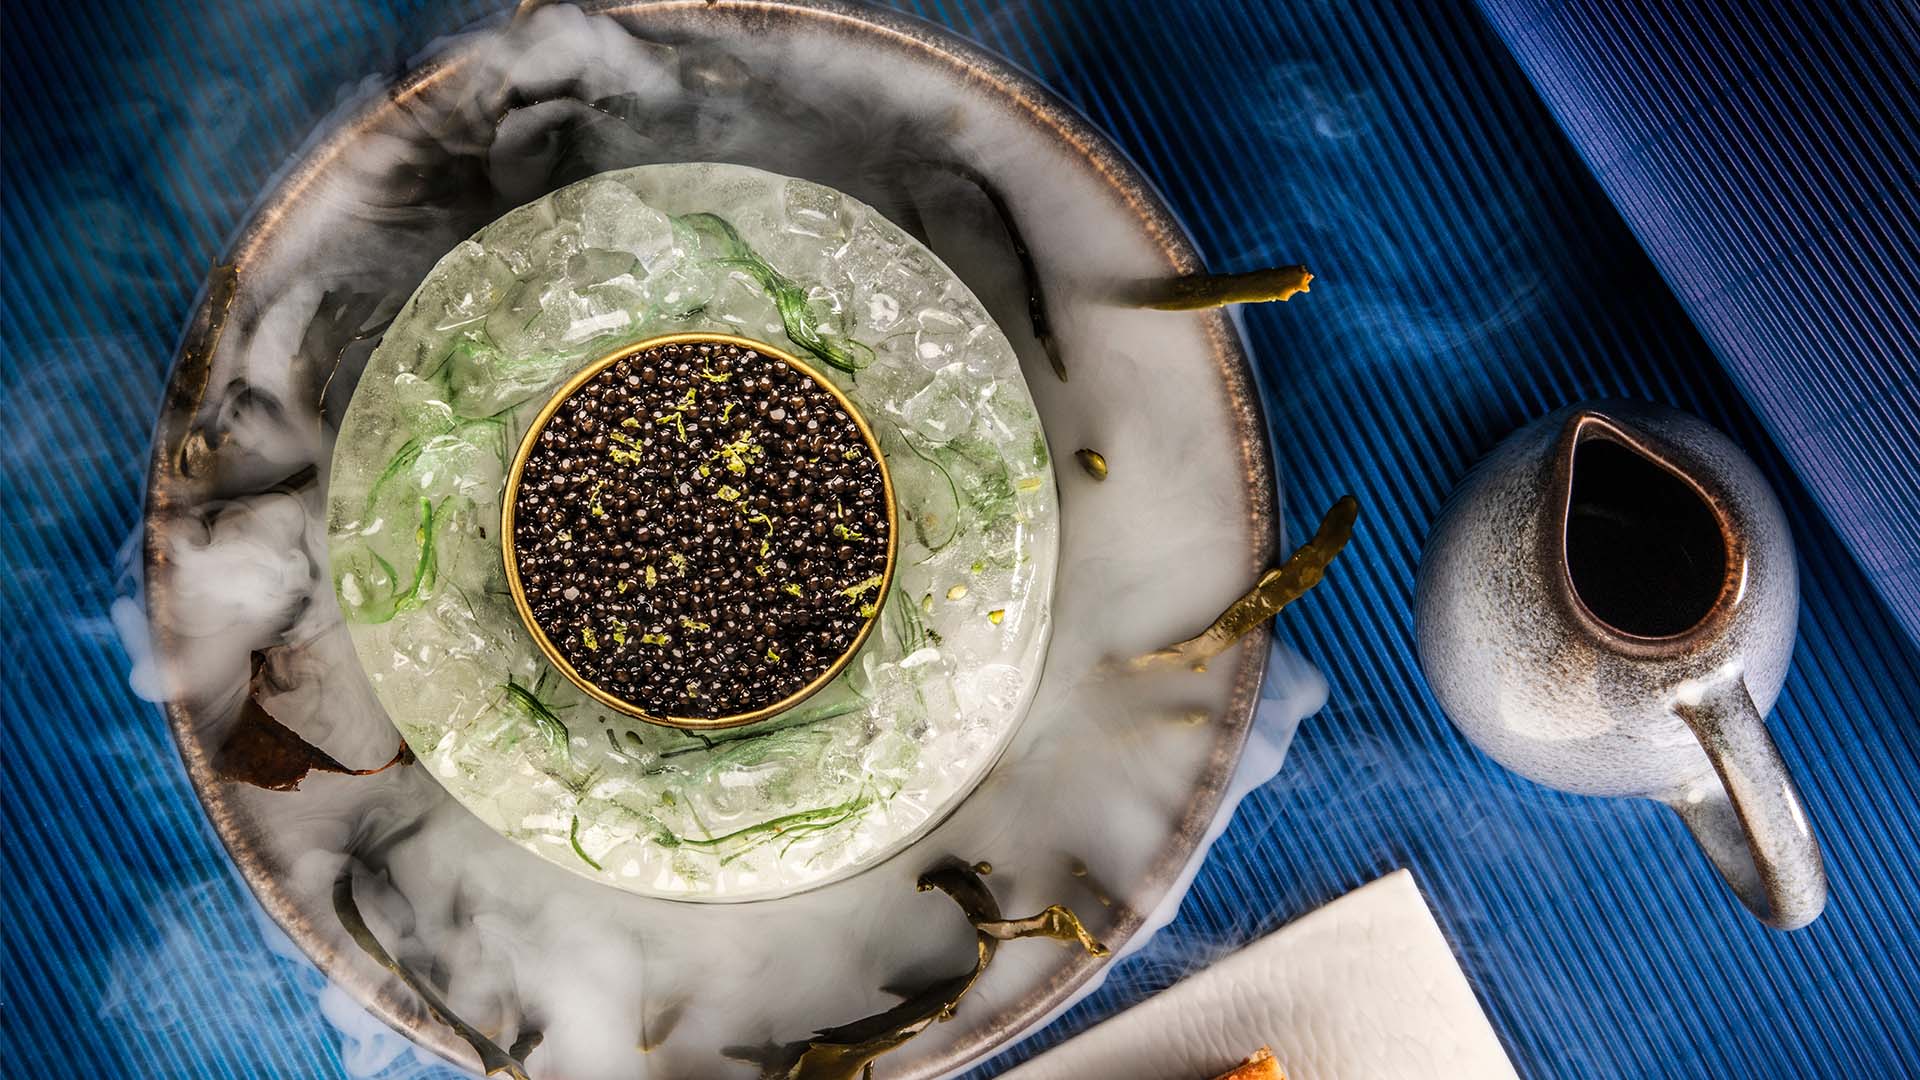 president wilson hotel bayview restaurant plate of caviar